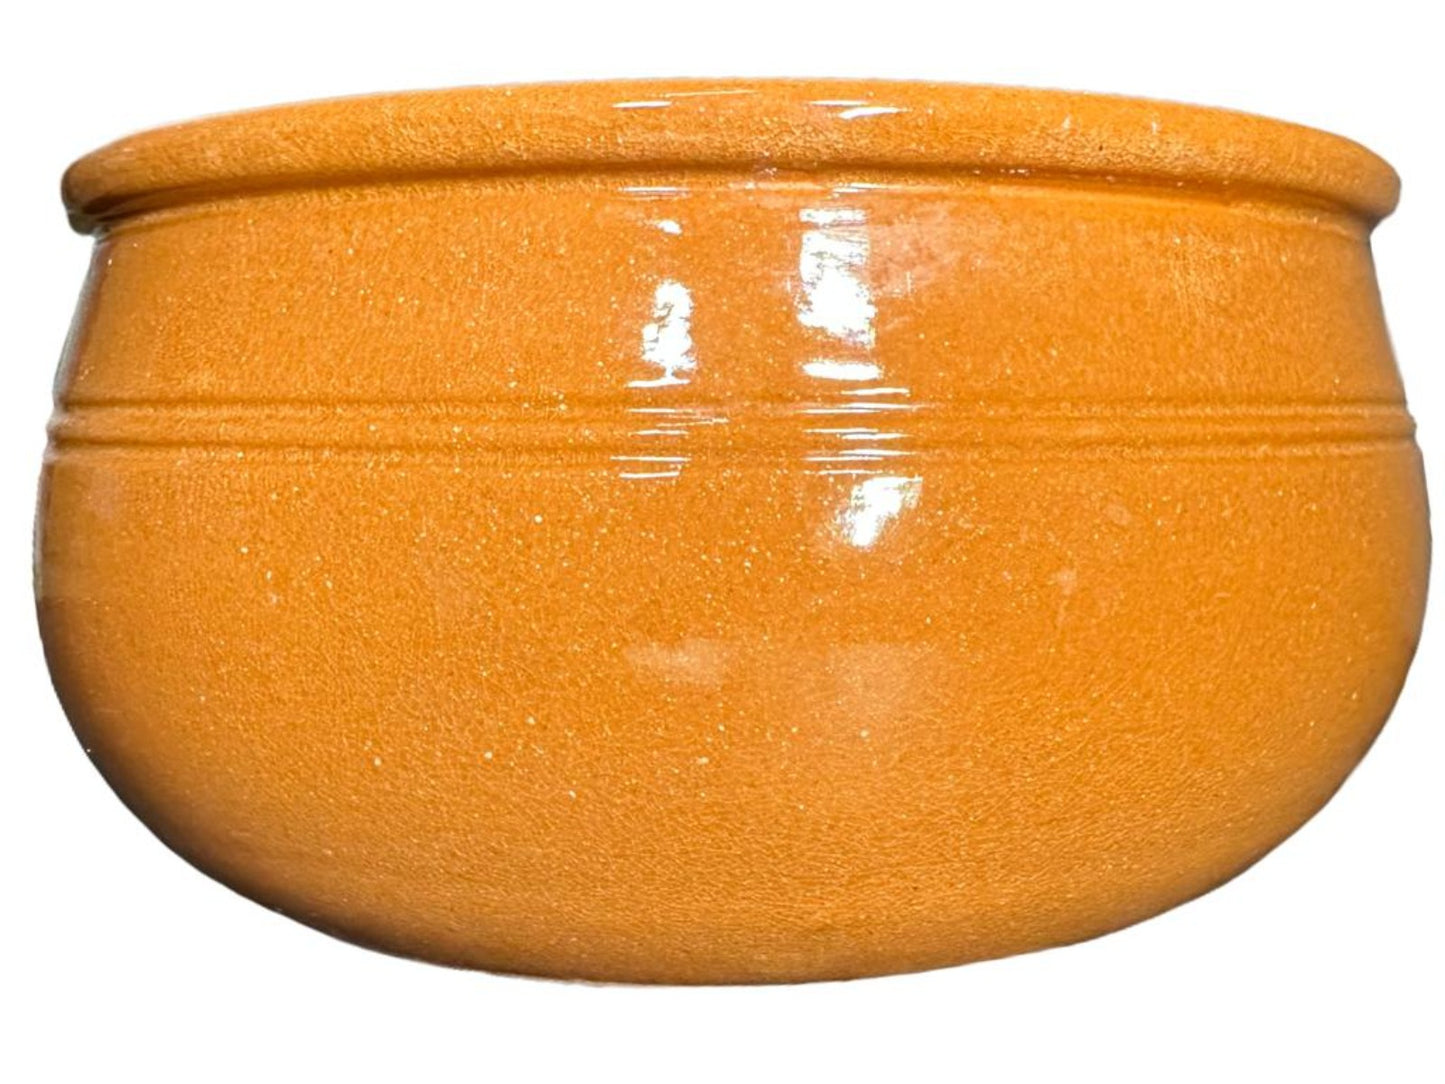 Ceramica Edgar Picas Caçarola Alta Lisa Portuguese Terracotta Casserole Pouring Dish 17cm